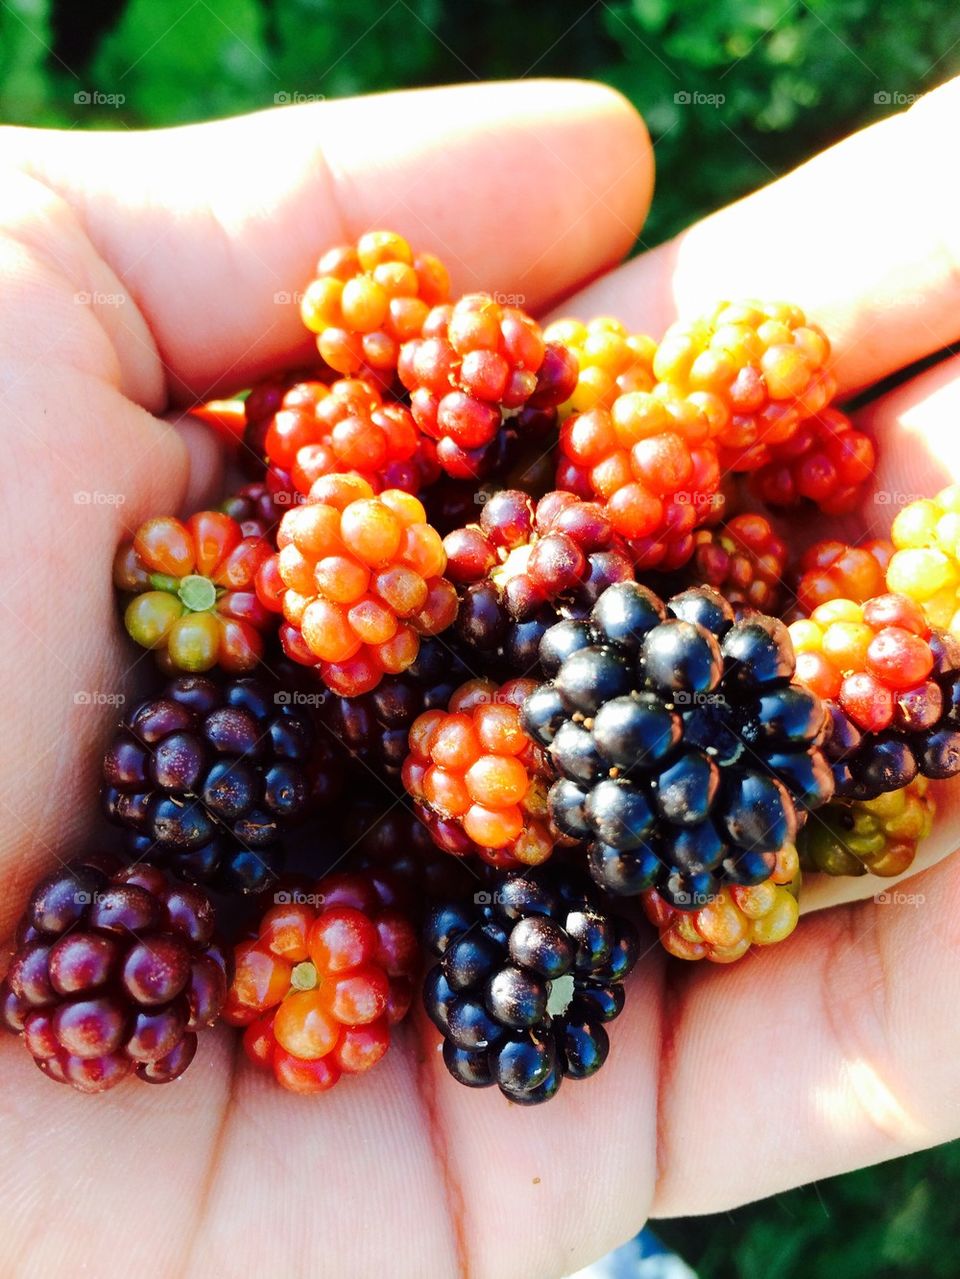 A hands holding fresh blackberries